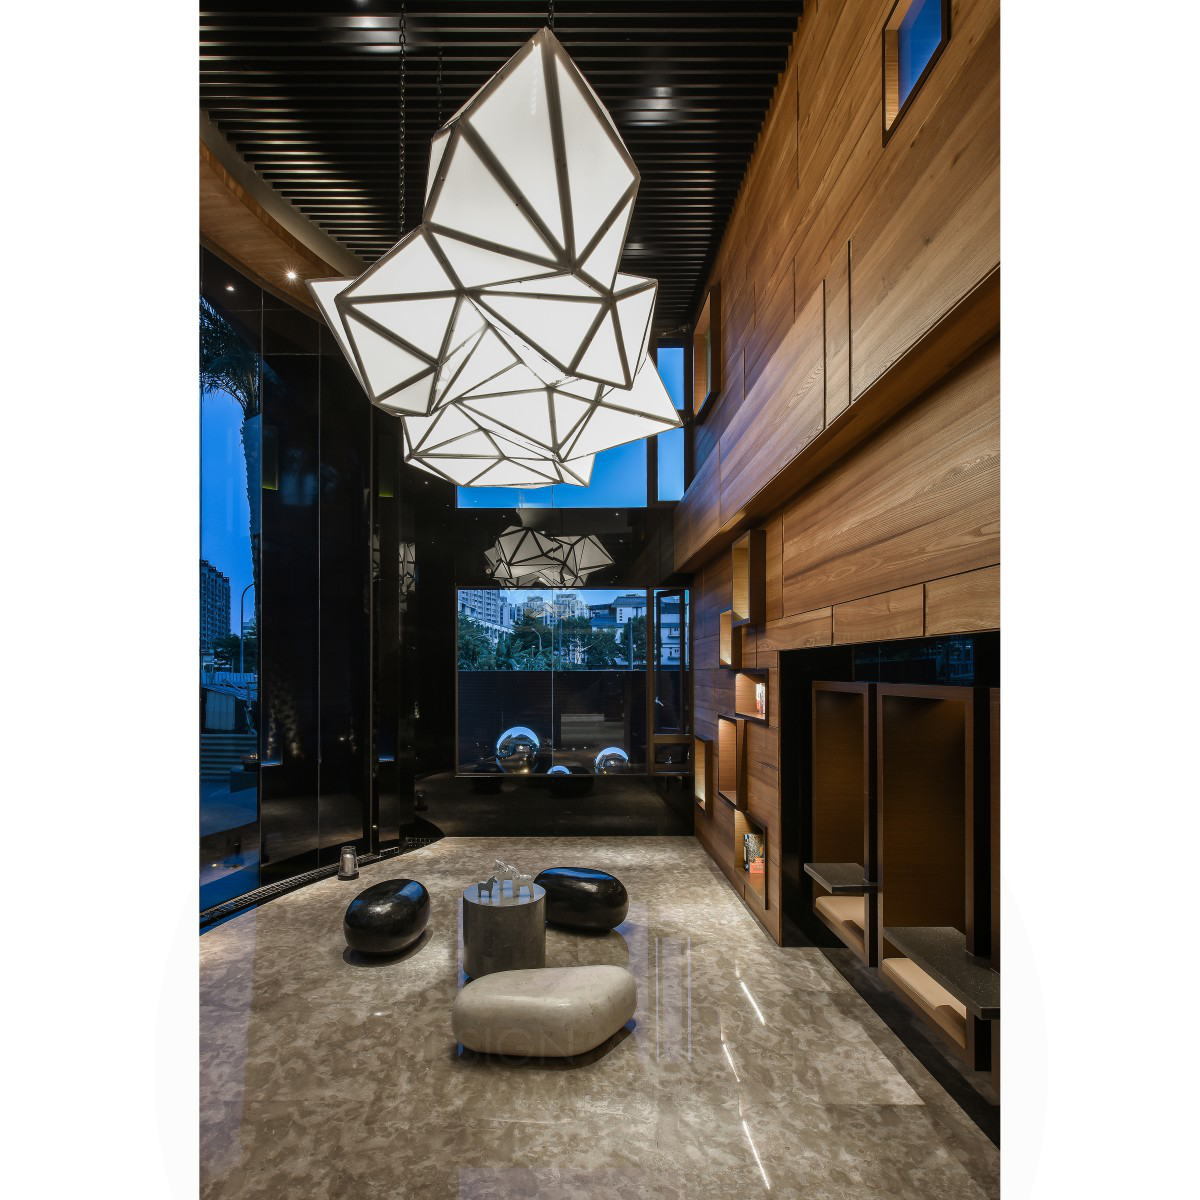 MM Hall Interior Design by Tzu-Cheng Cho